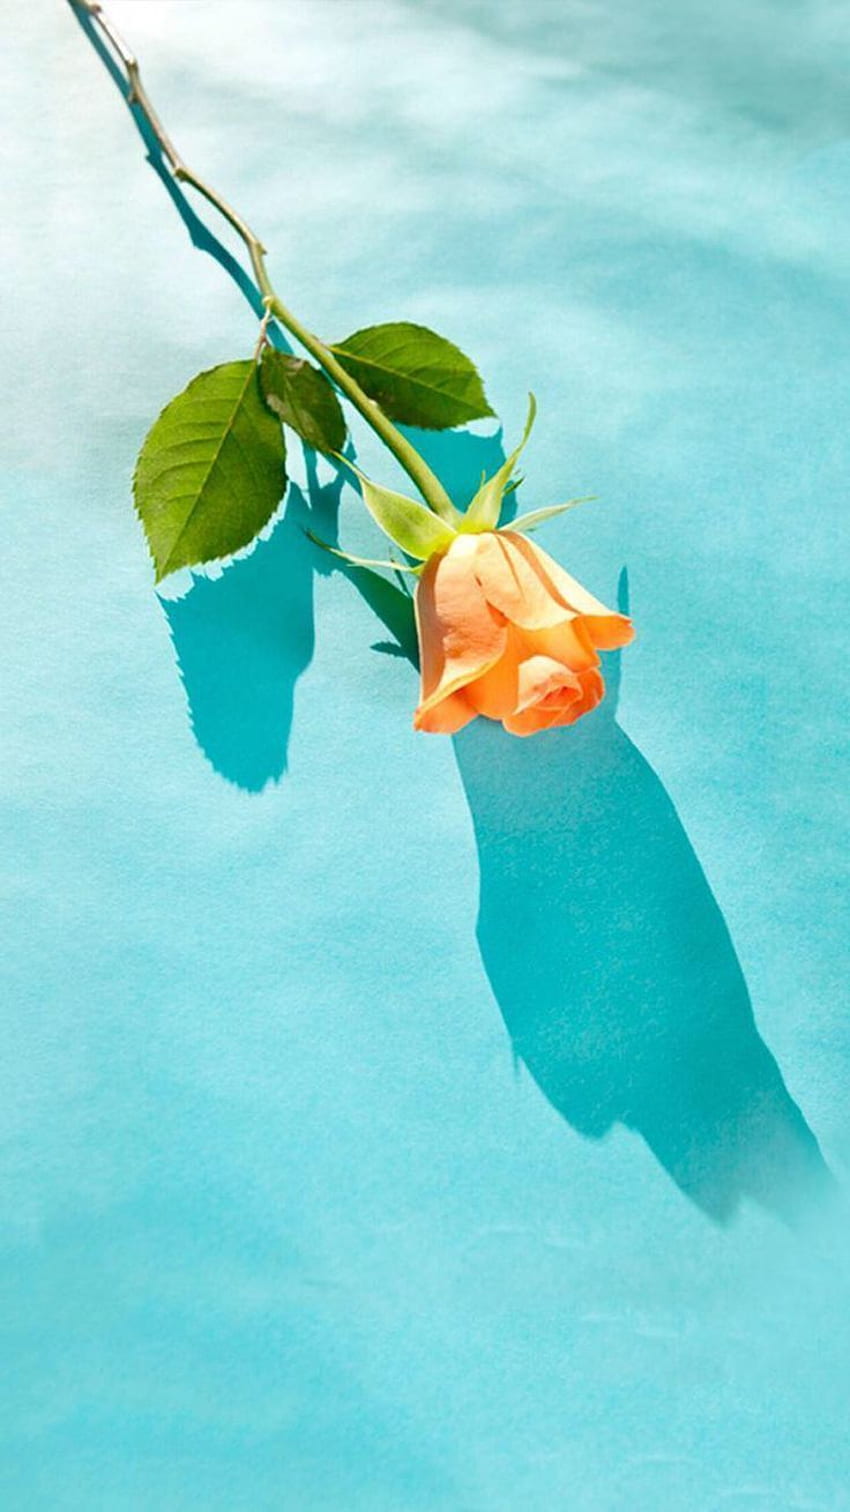 A single orange rose in a vase of water - Teal